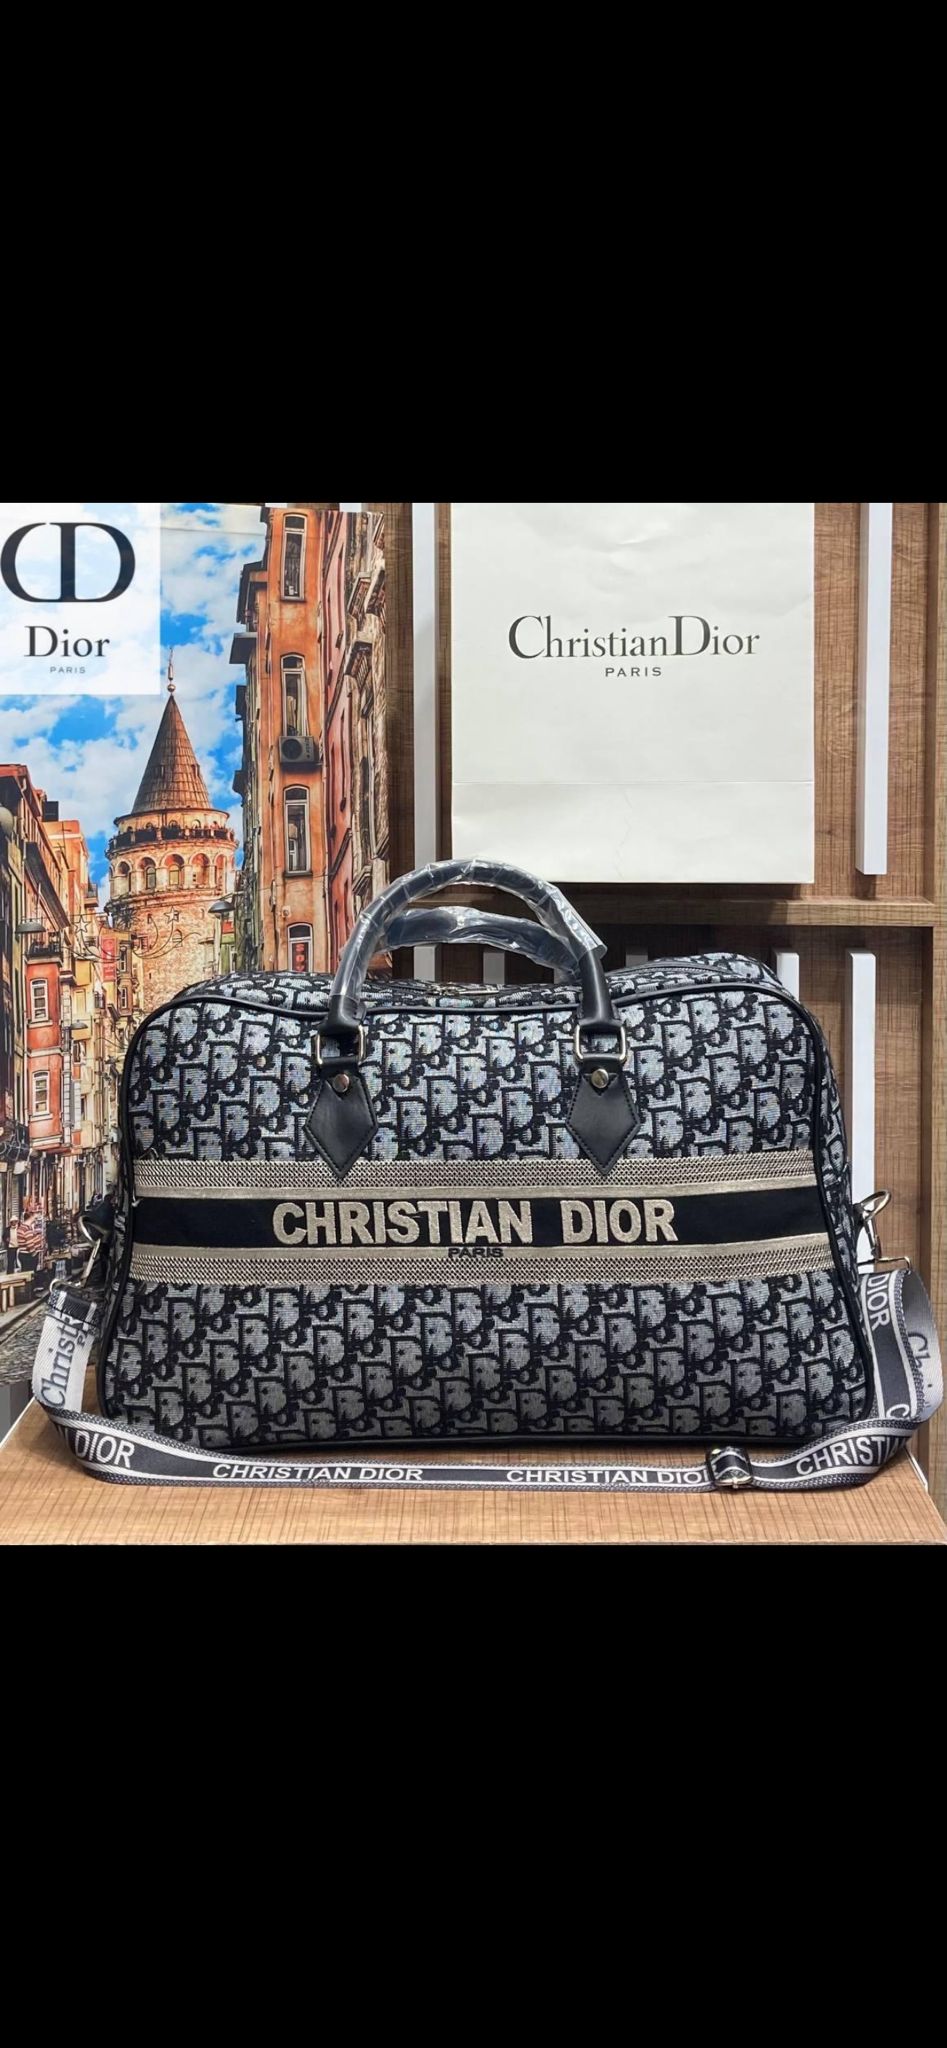 CHRISTIAN DIOR travel bag